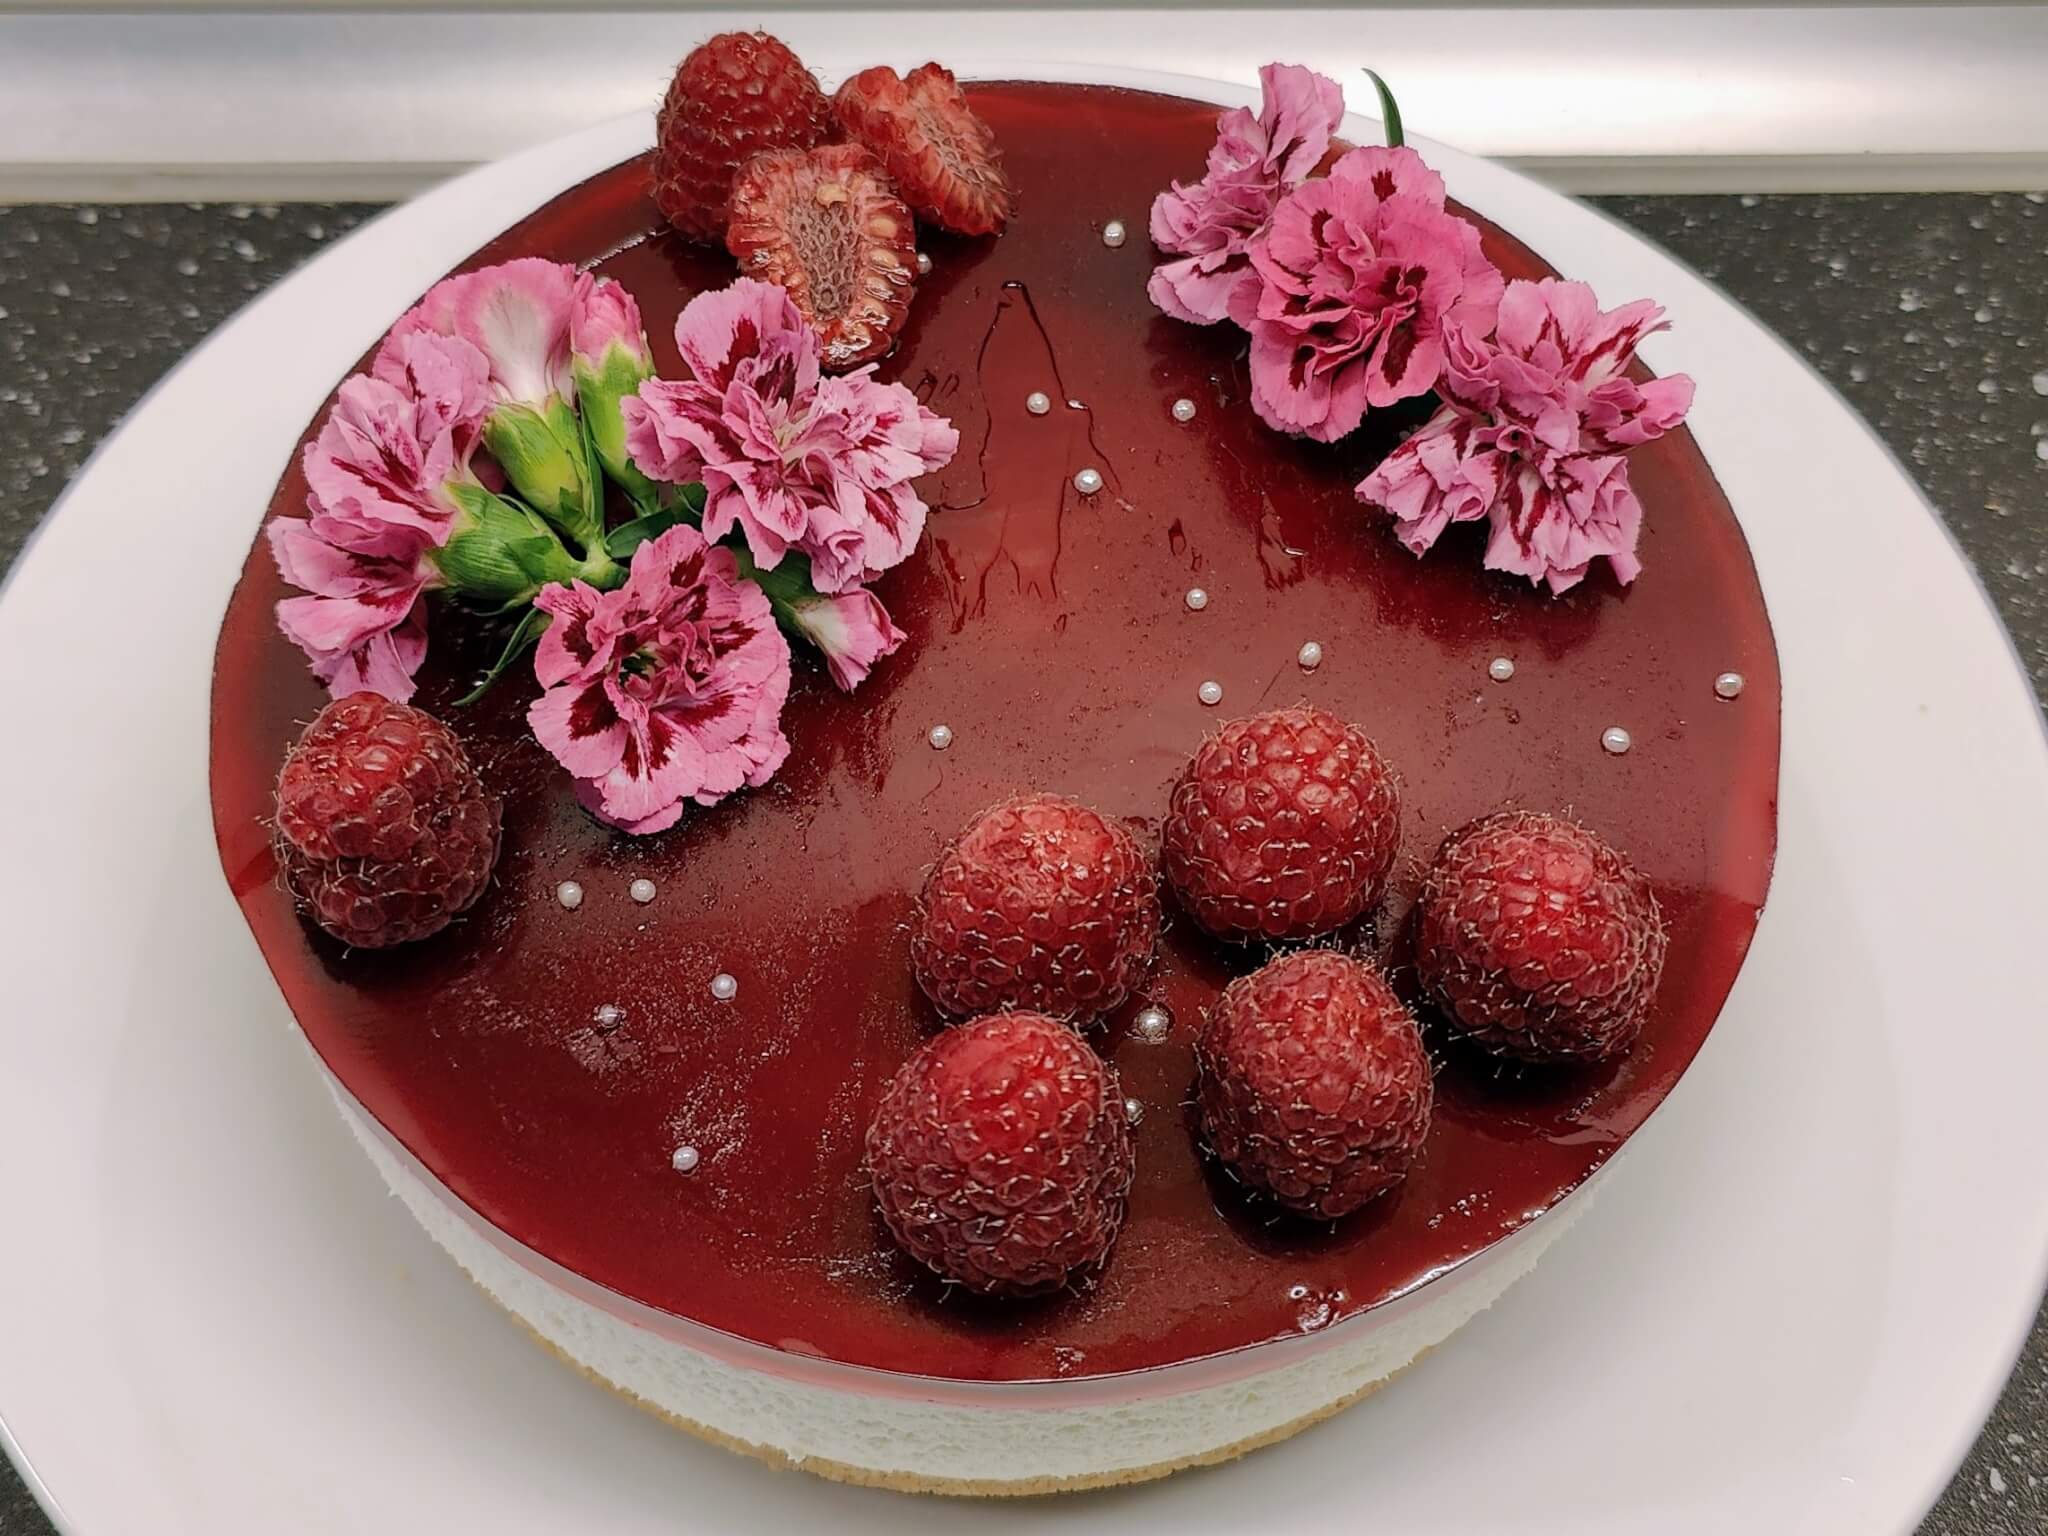 Cheesecake med hindbær